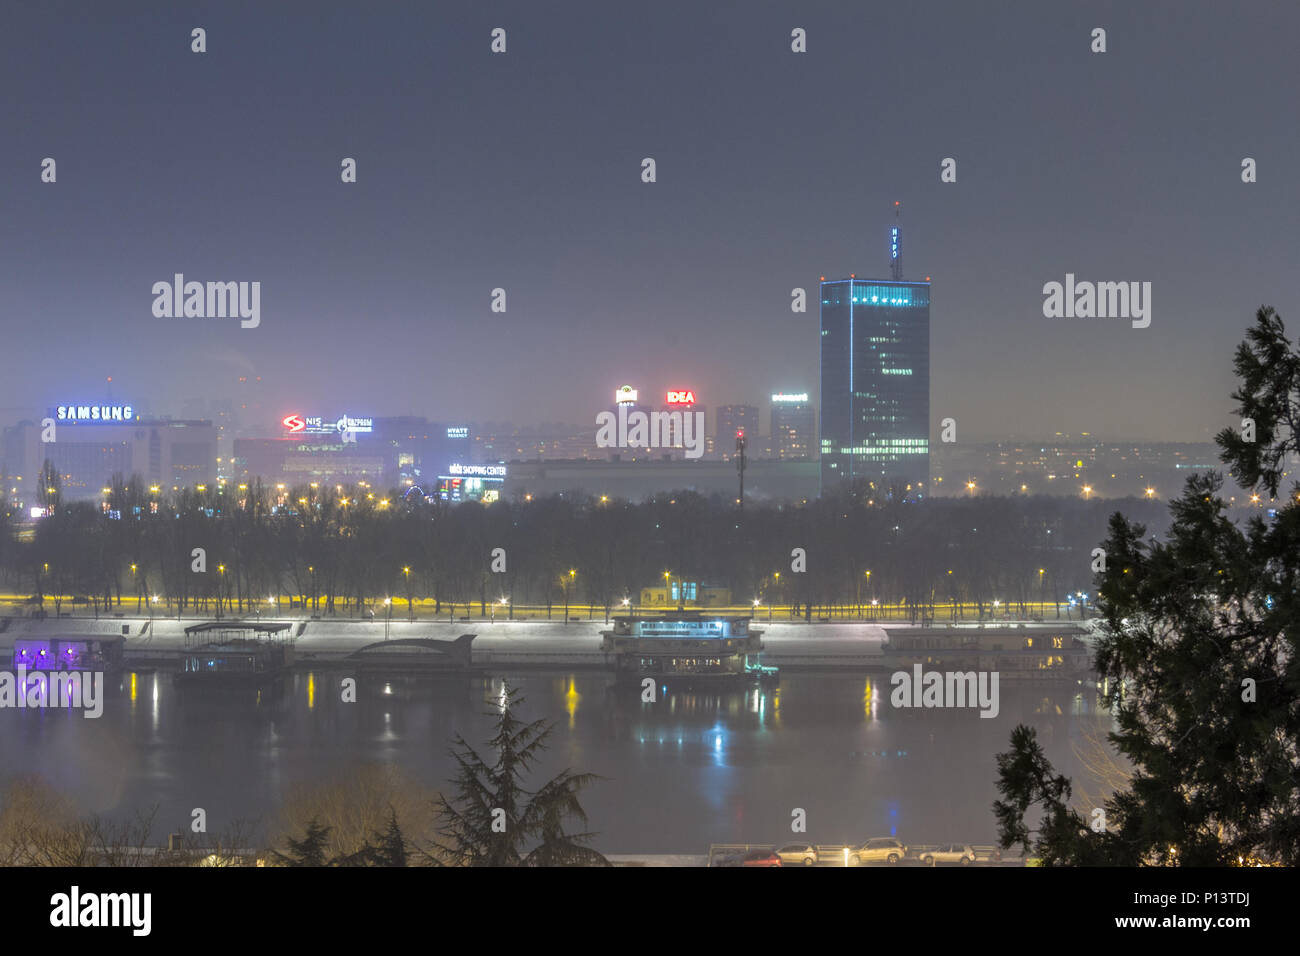 BELGRADE, SERBIA - JANUARY 2, 2015: Skyline of New Belgrade (Novi Beograd) seen by night from the Kalemegdan fortress. The main landmarks of the distr Stock Photo